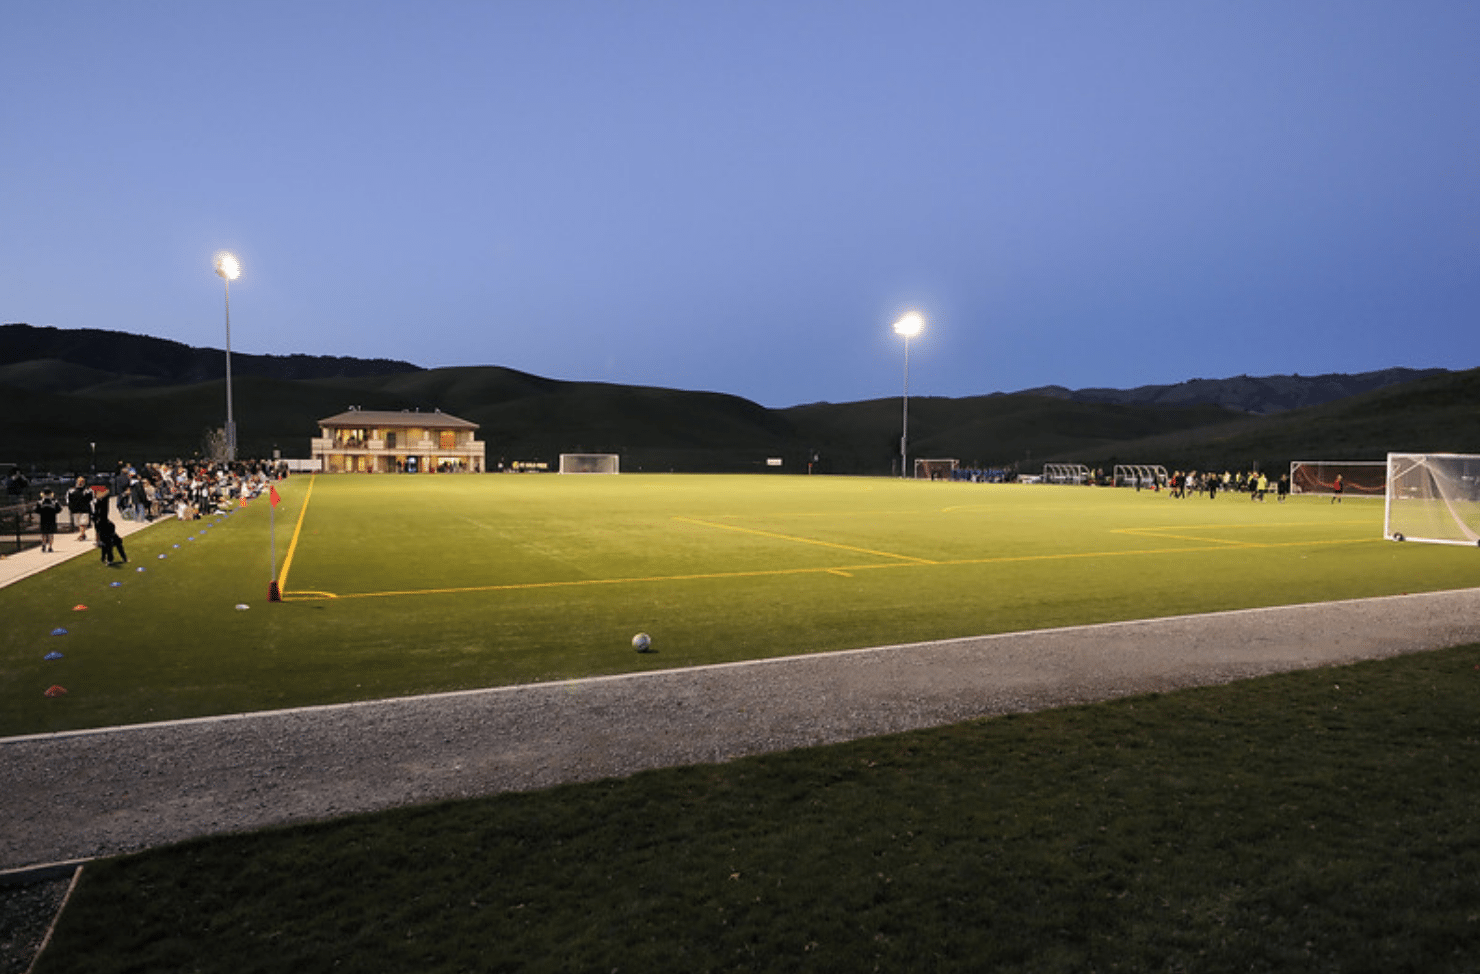 Mustang Soccer Complex